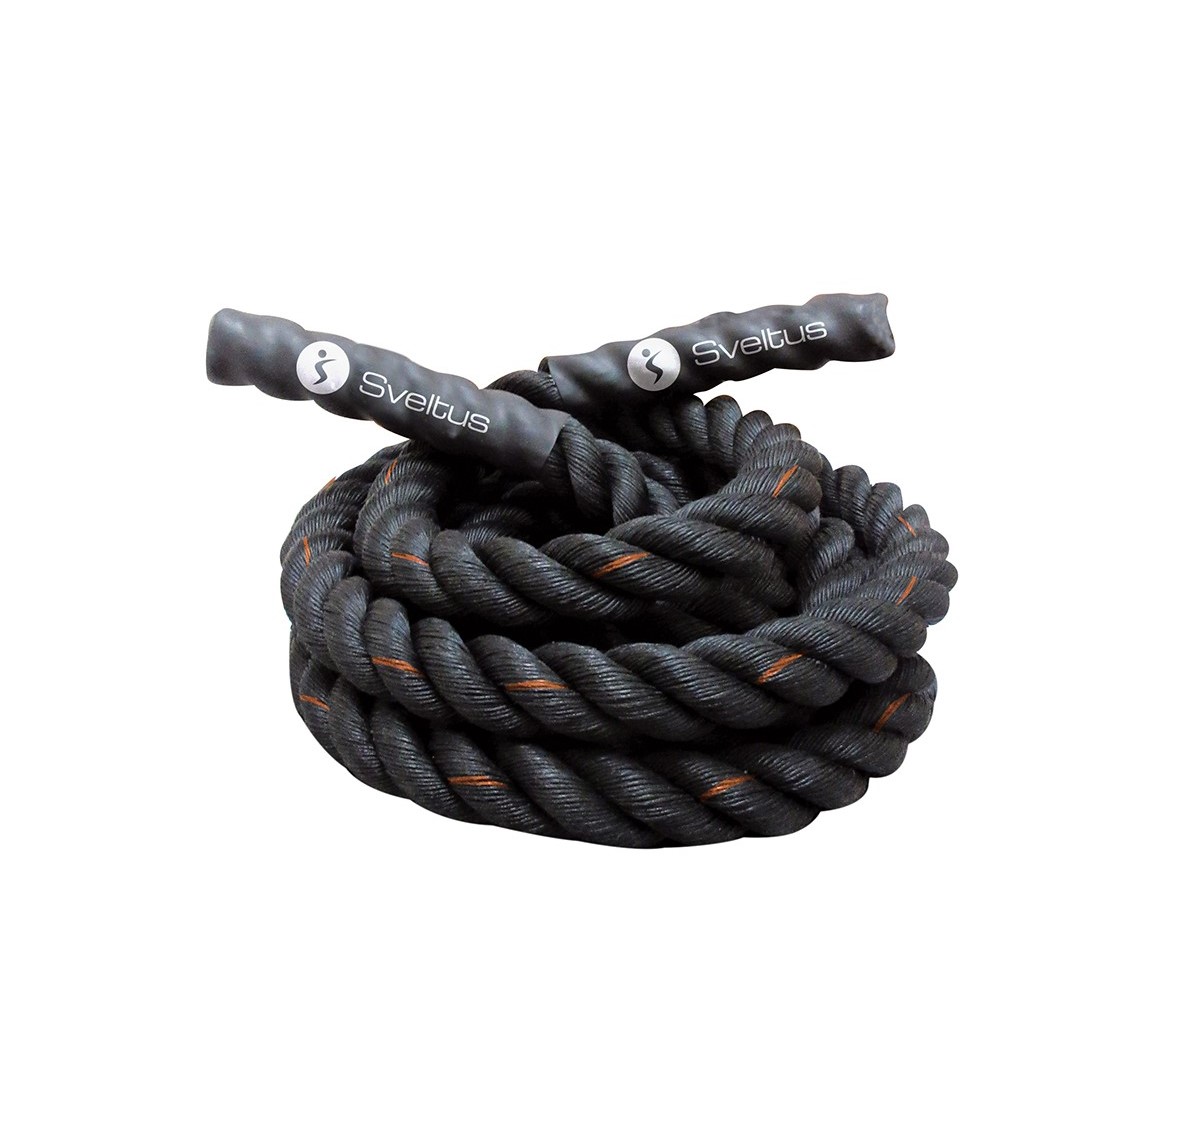 Cuerda para saltar pesada, 3 metros de longitud. Color negro